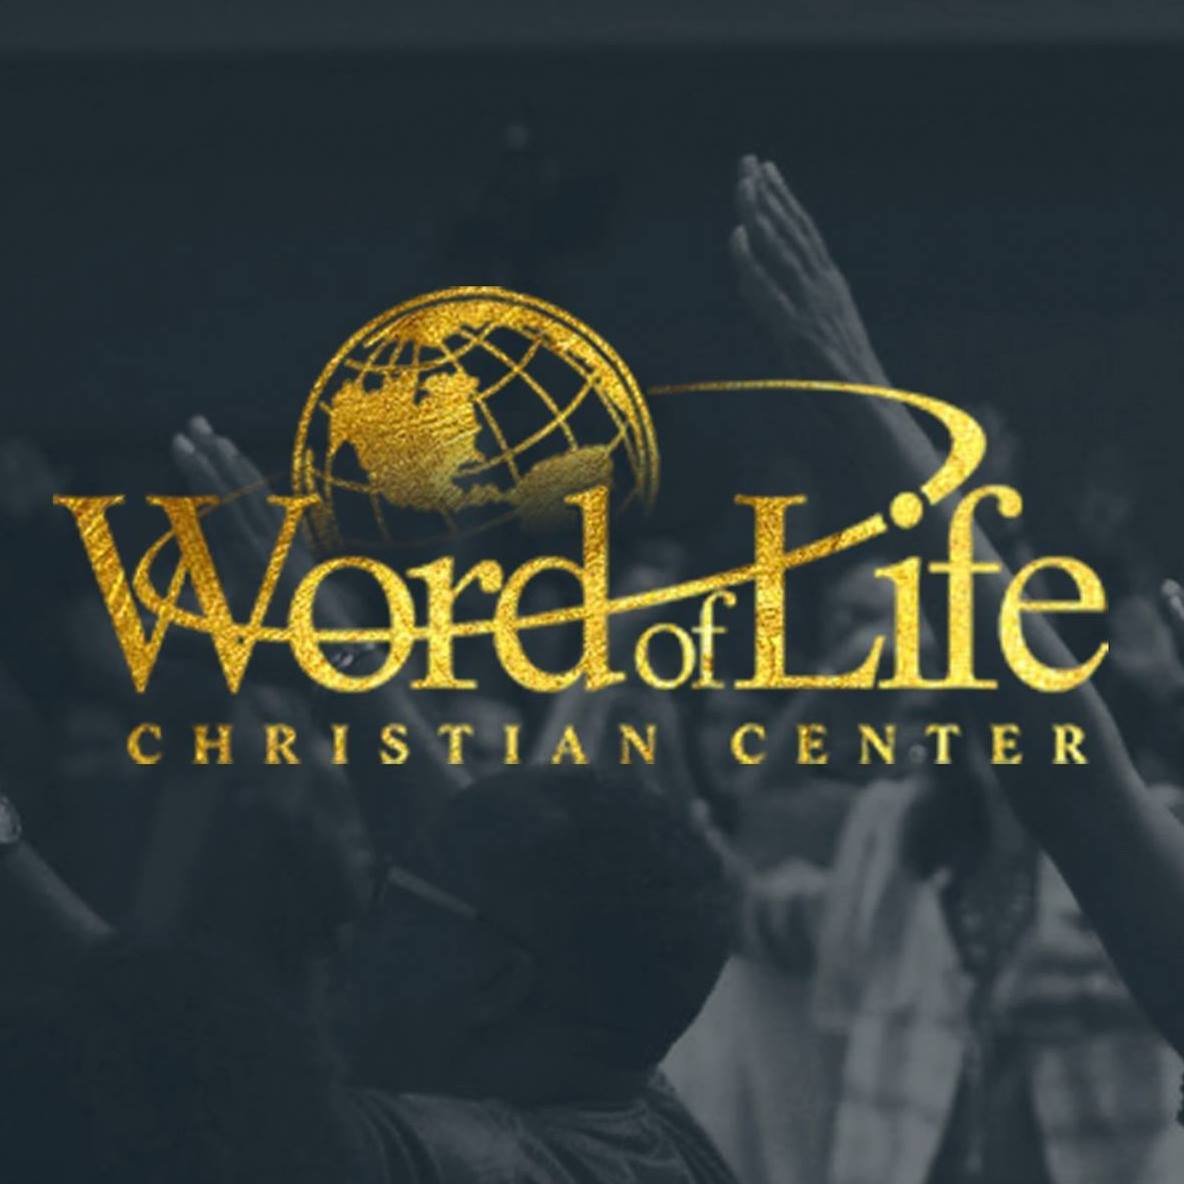 Word of Life Christian Center